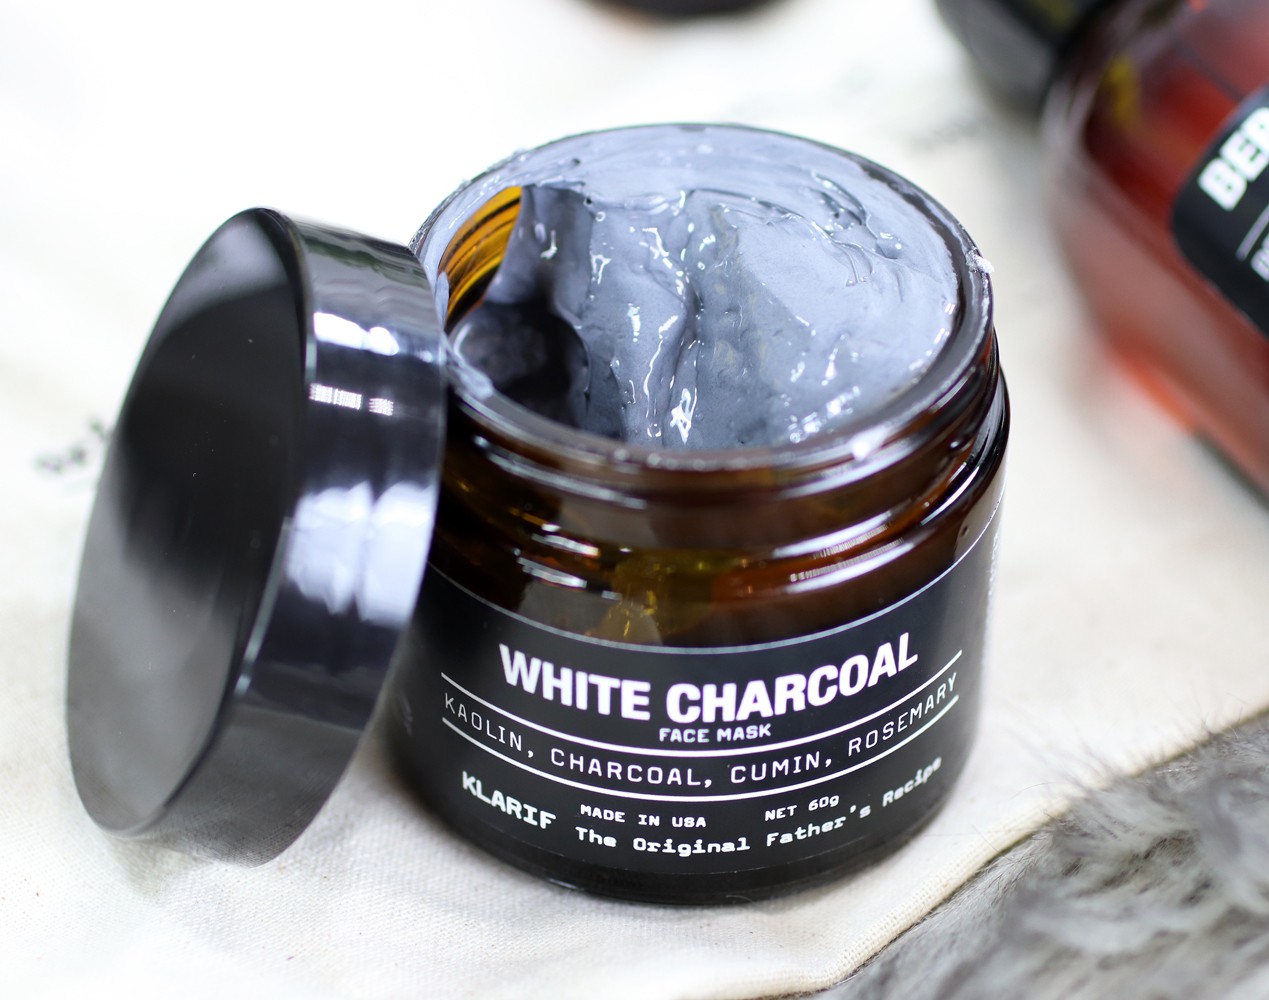 Klarif White Charcoal Face Mask Review - Klarif beauty products by popular Los Angeles cruelty free beauty blogger My Beauty Bunny